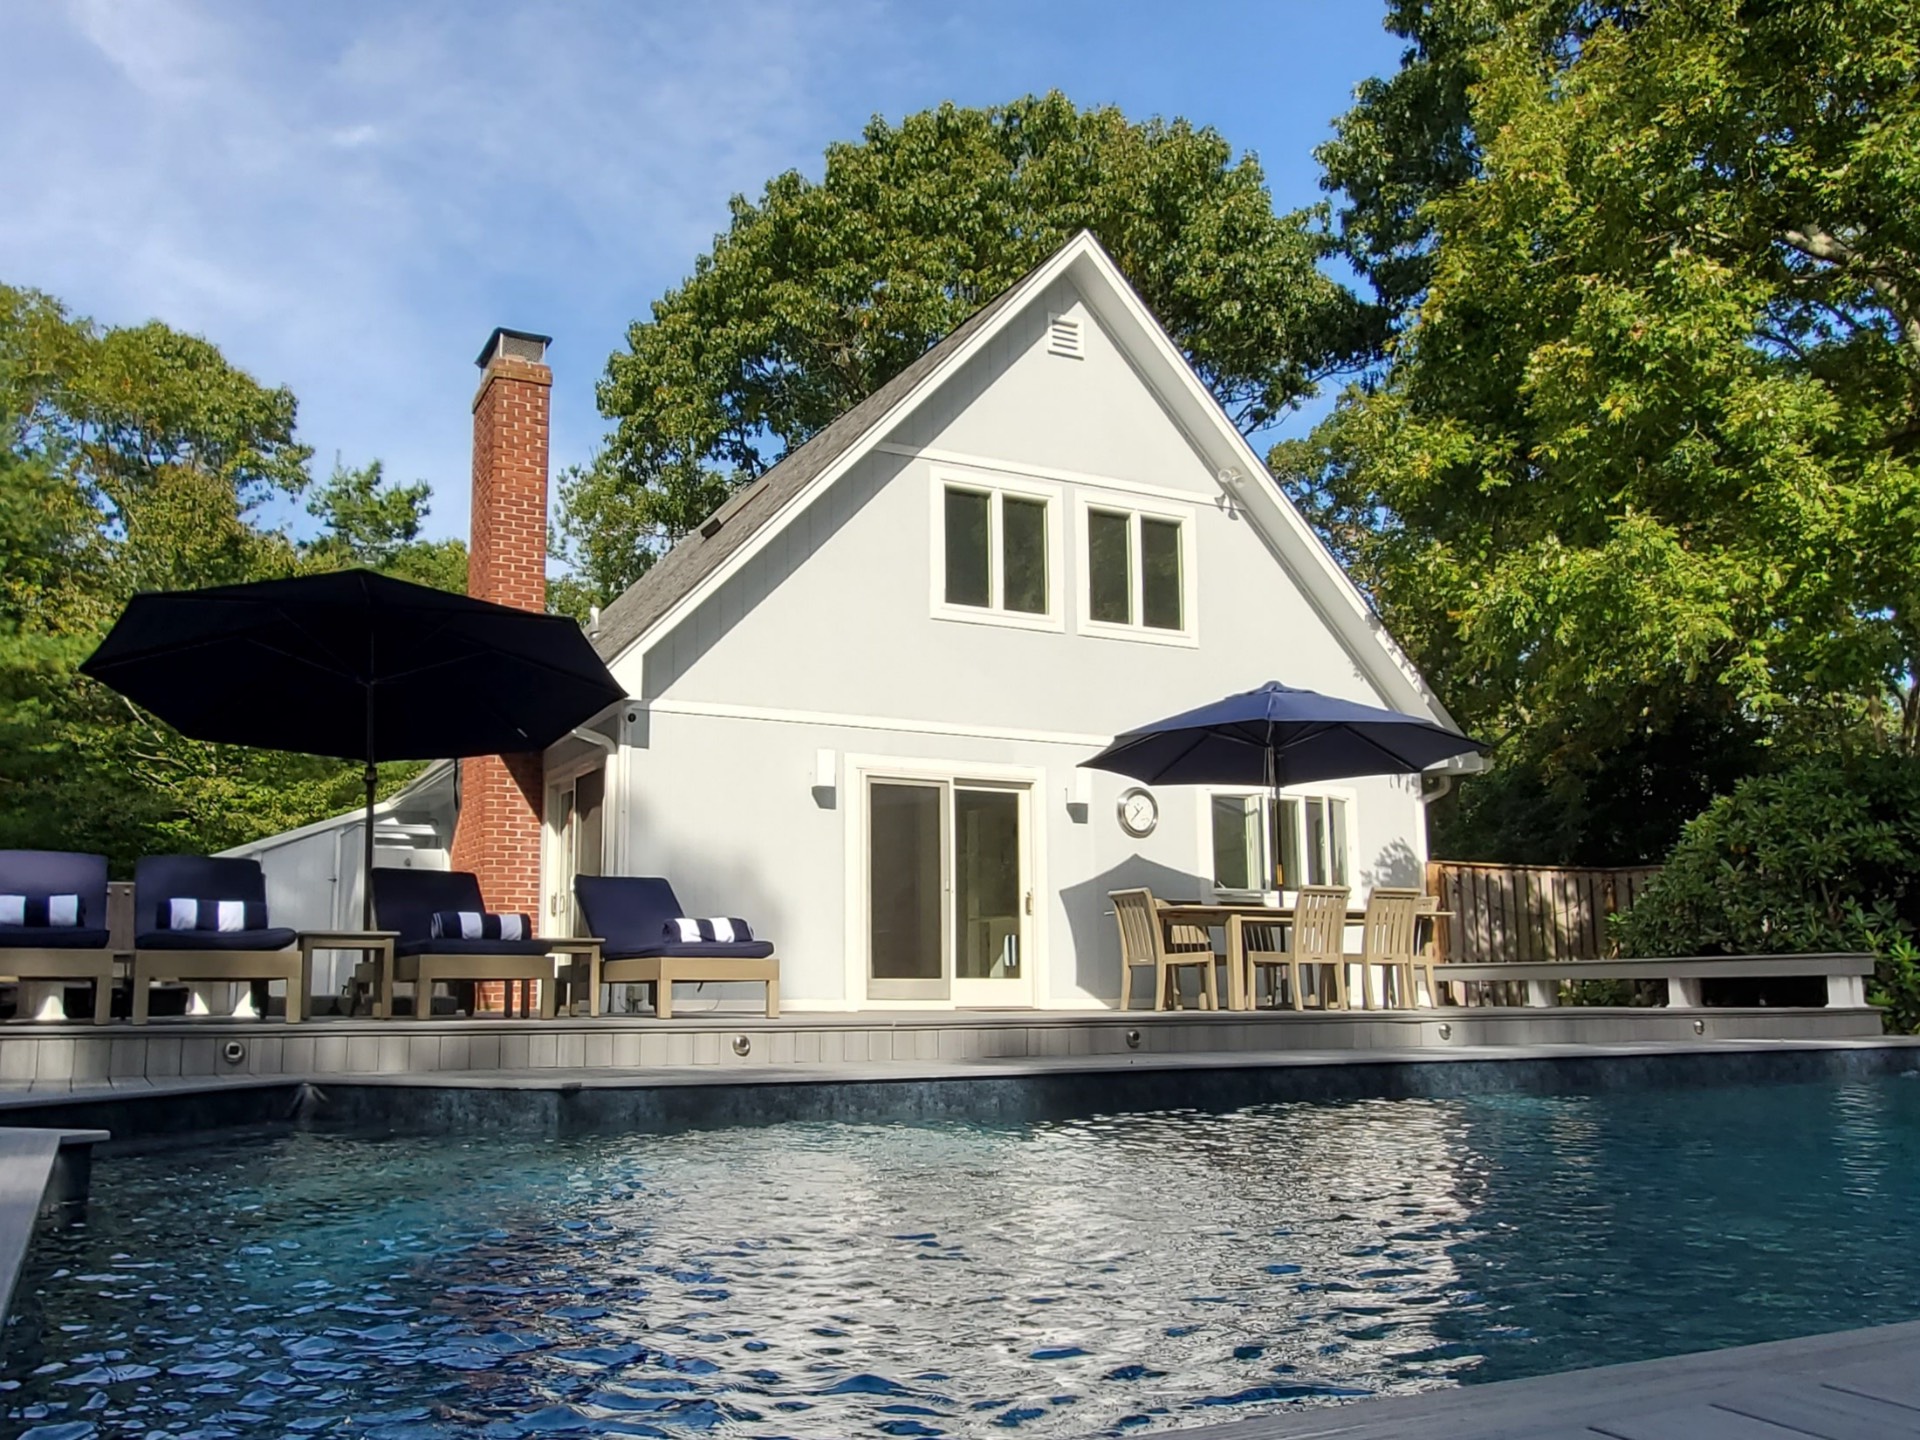 Rental Property at 128 Harbor Boulevard, Springs, Hamptons, NY - Bedrooms: 3 
Bathrooms: 2  - $20,000 MO.